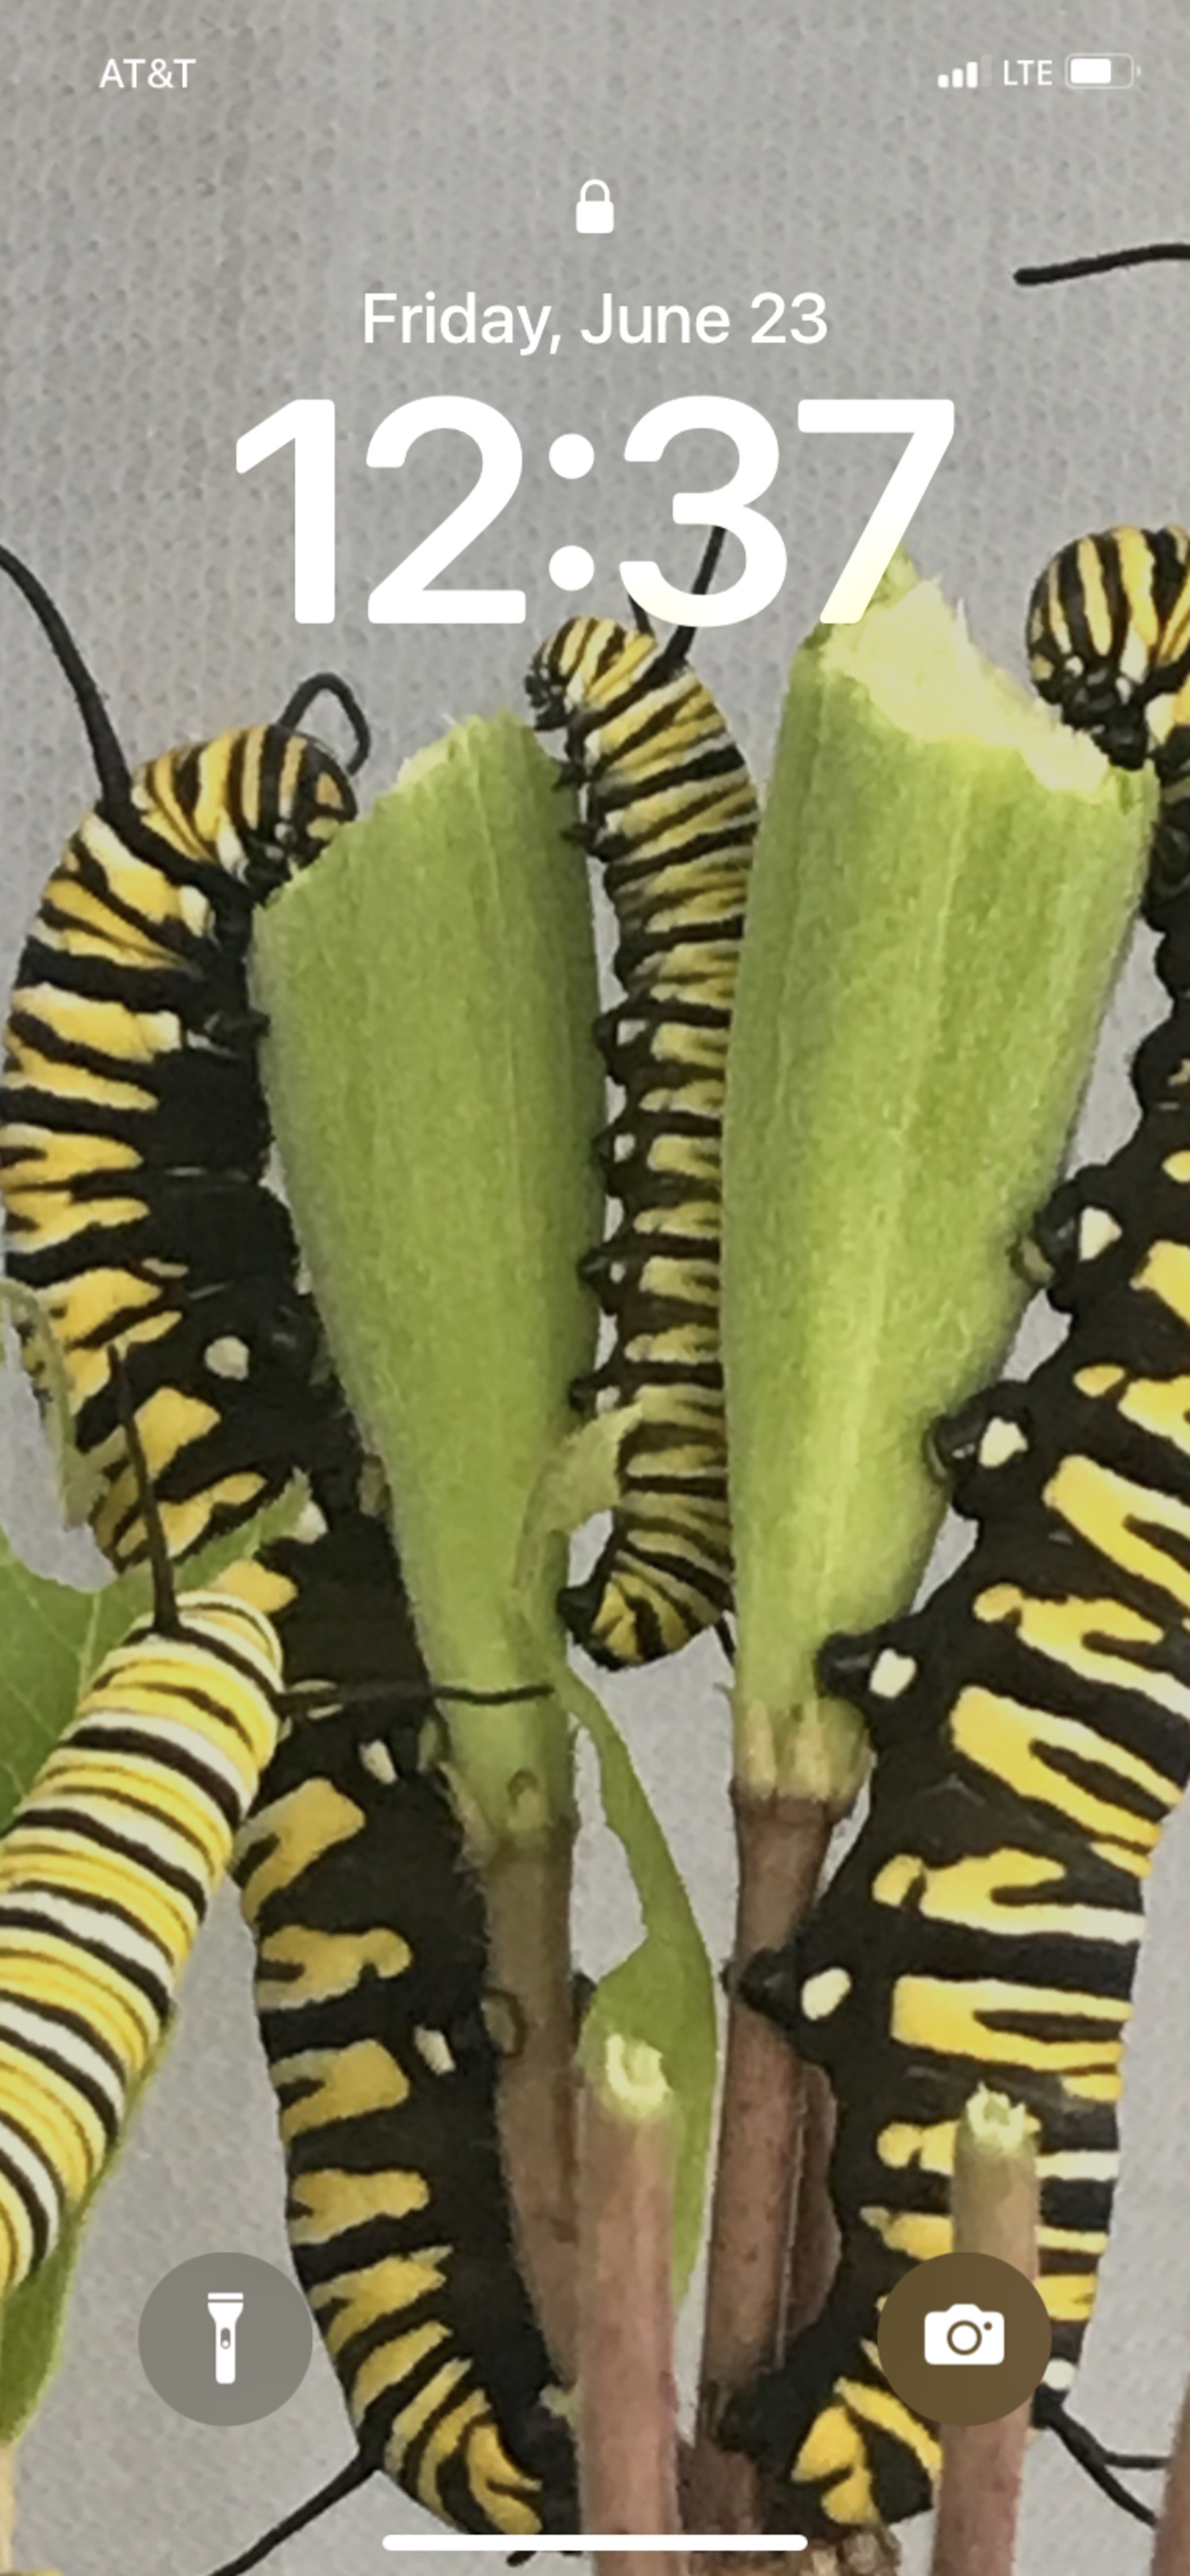 Monarch caterpillars on milkweed pods. MARY VINNEAU